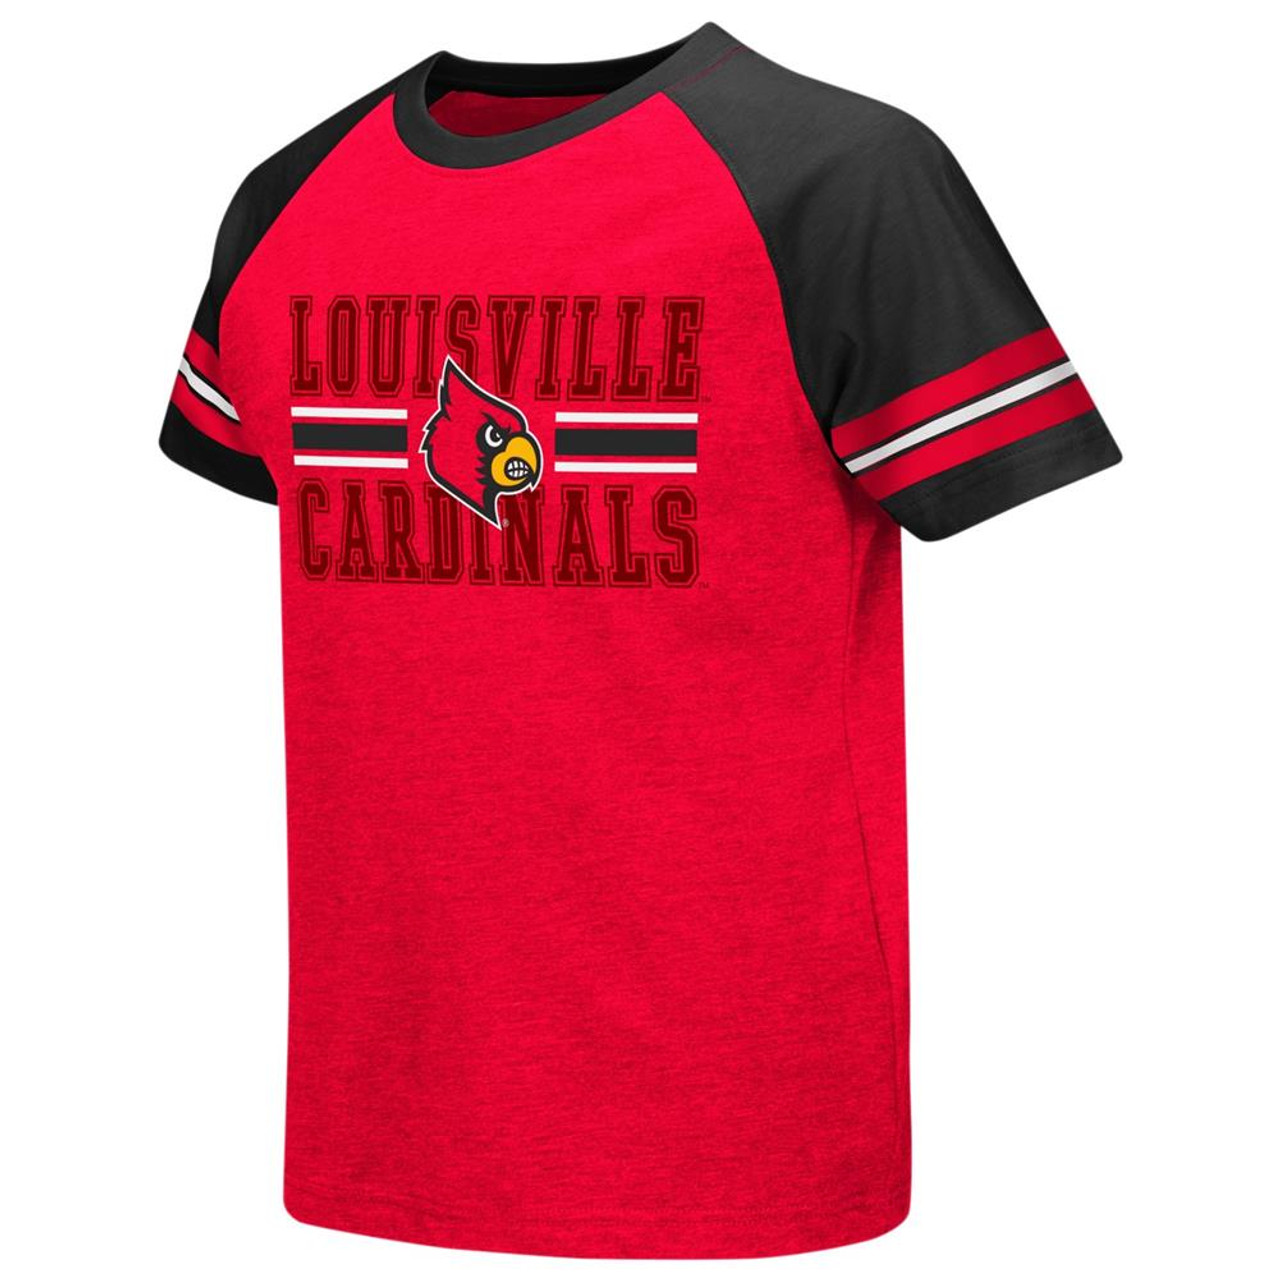 Louisville Cardinals Jersey Officially Licensed Raglan Baseball Tee